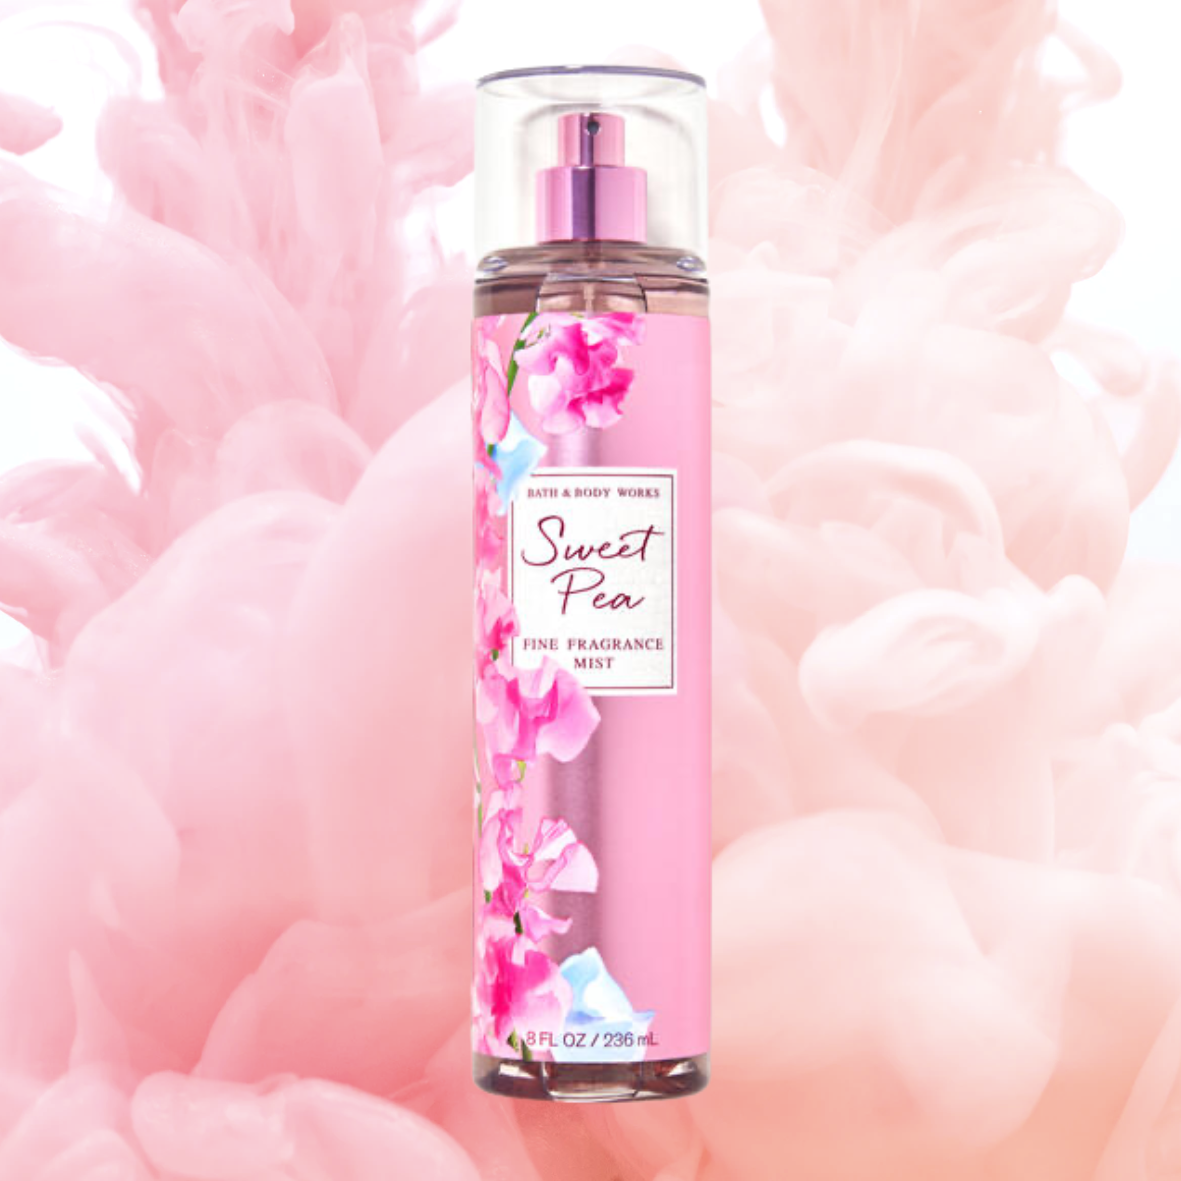 Bath & Body Works Sweet Pea
Best Sweet Pea Blossom Perfumes